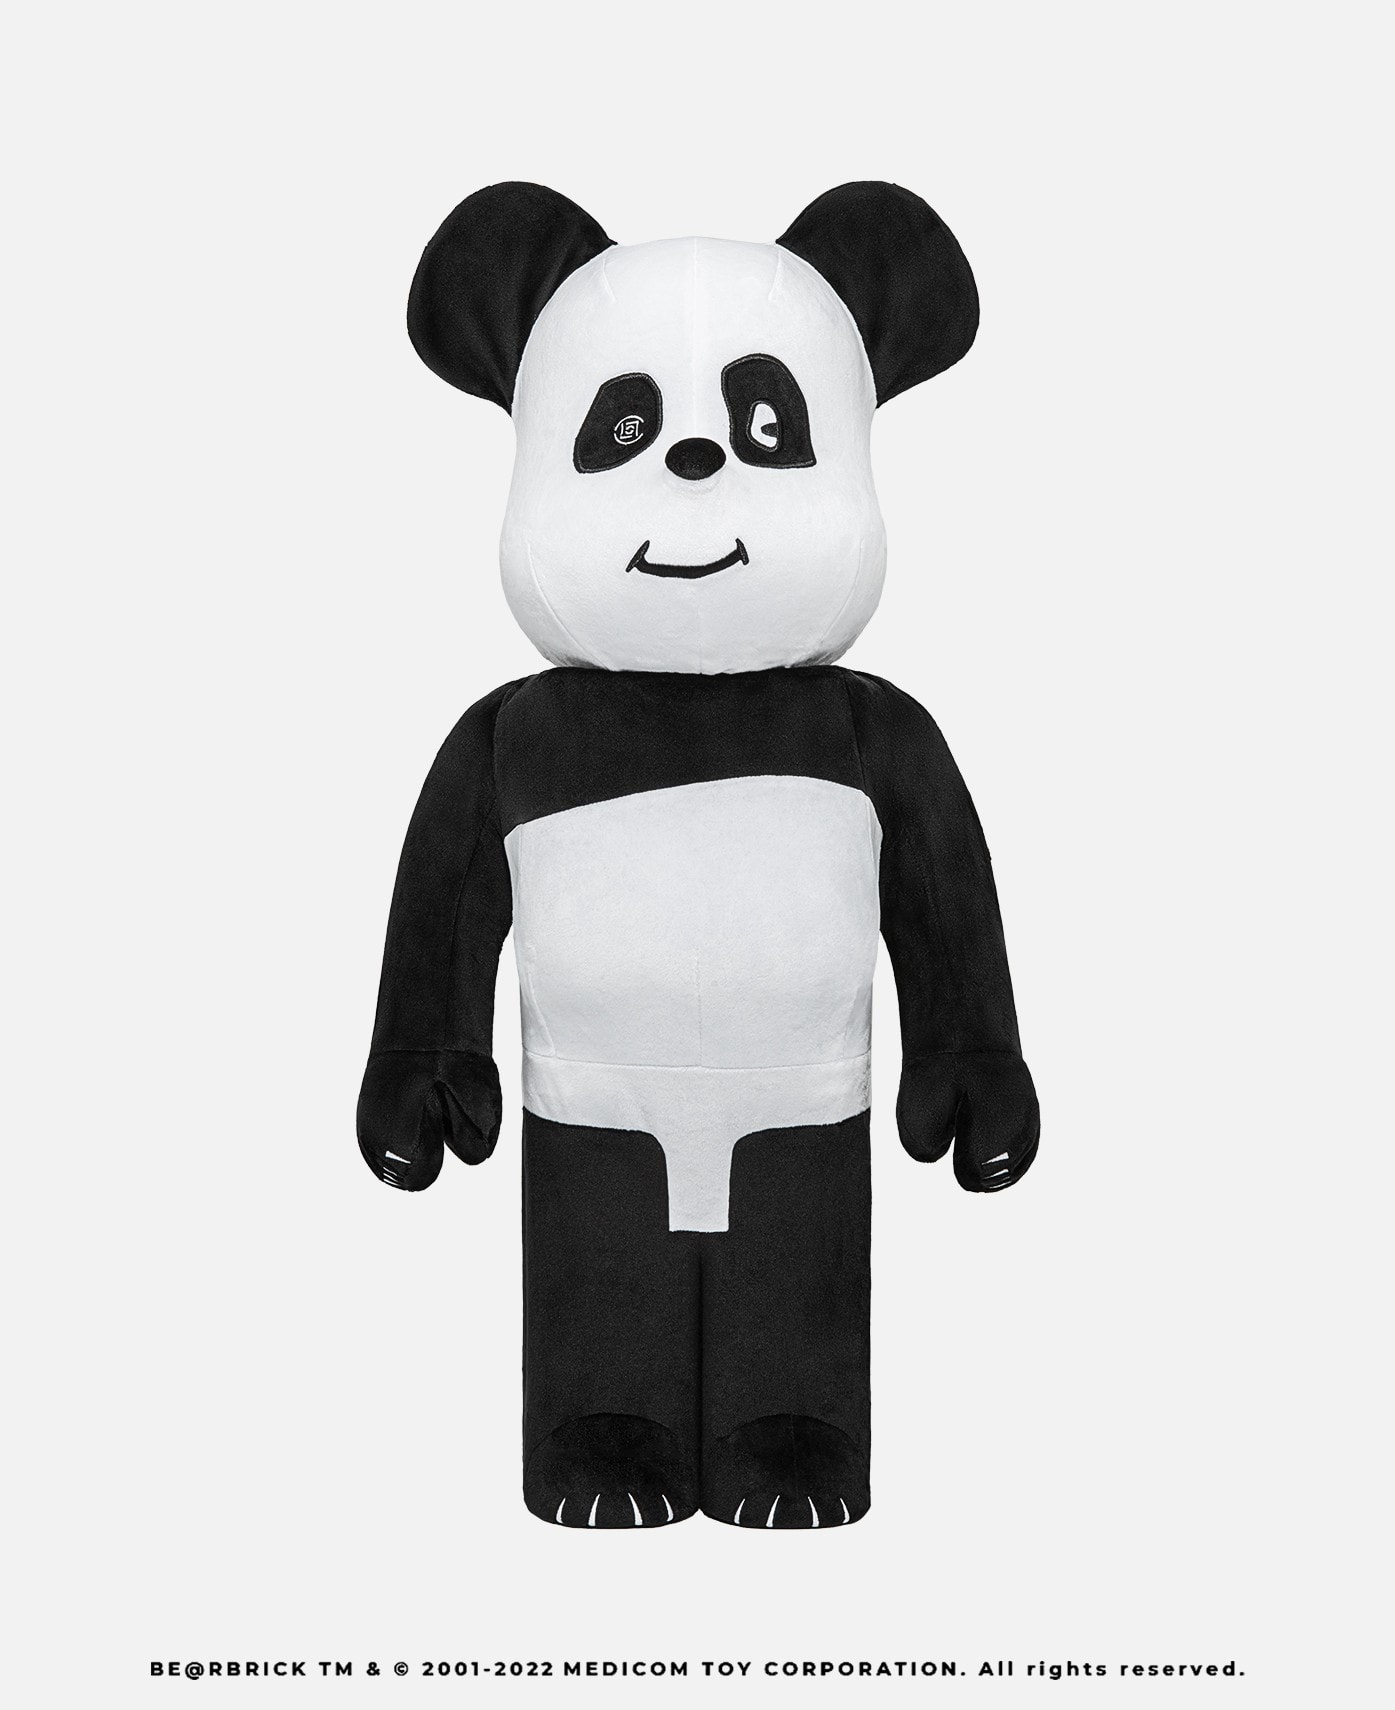 CLOT 攜手 MEDICOM TOY 打造全新 BE@RBRICK PANDA 大熊貓